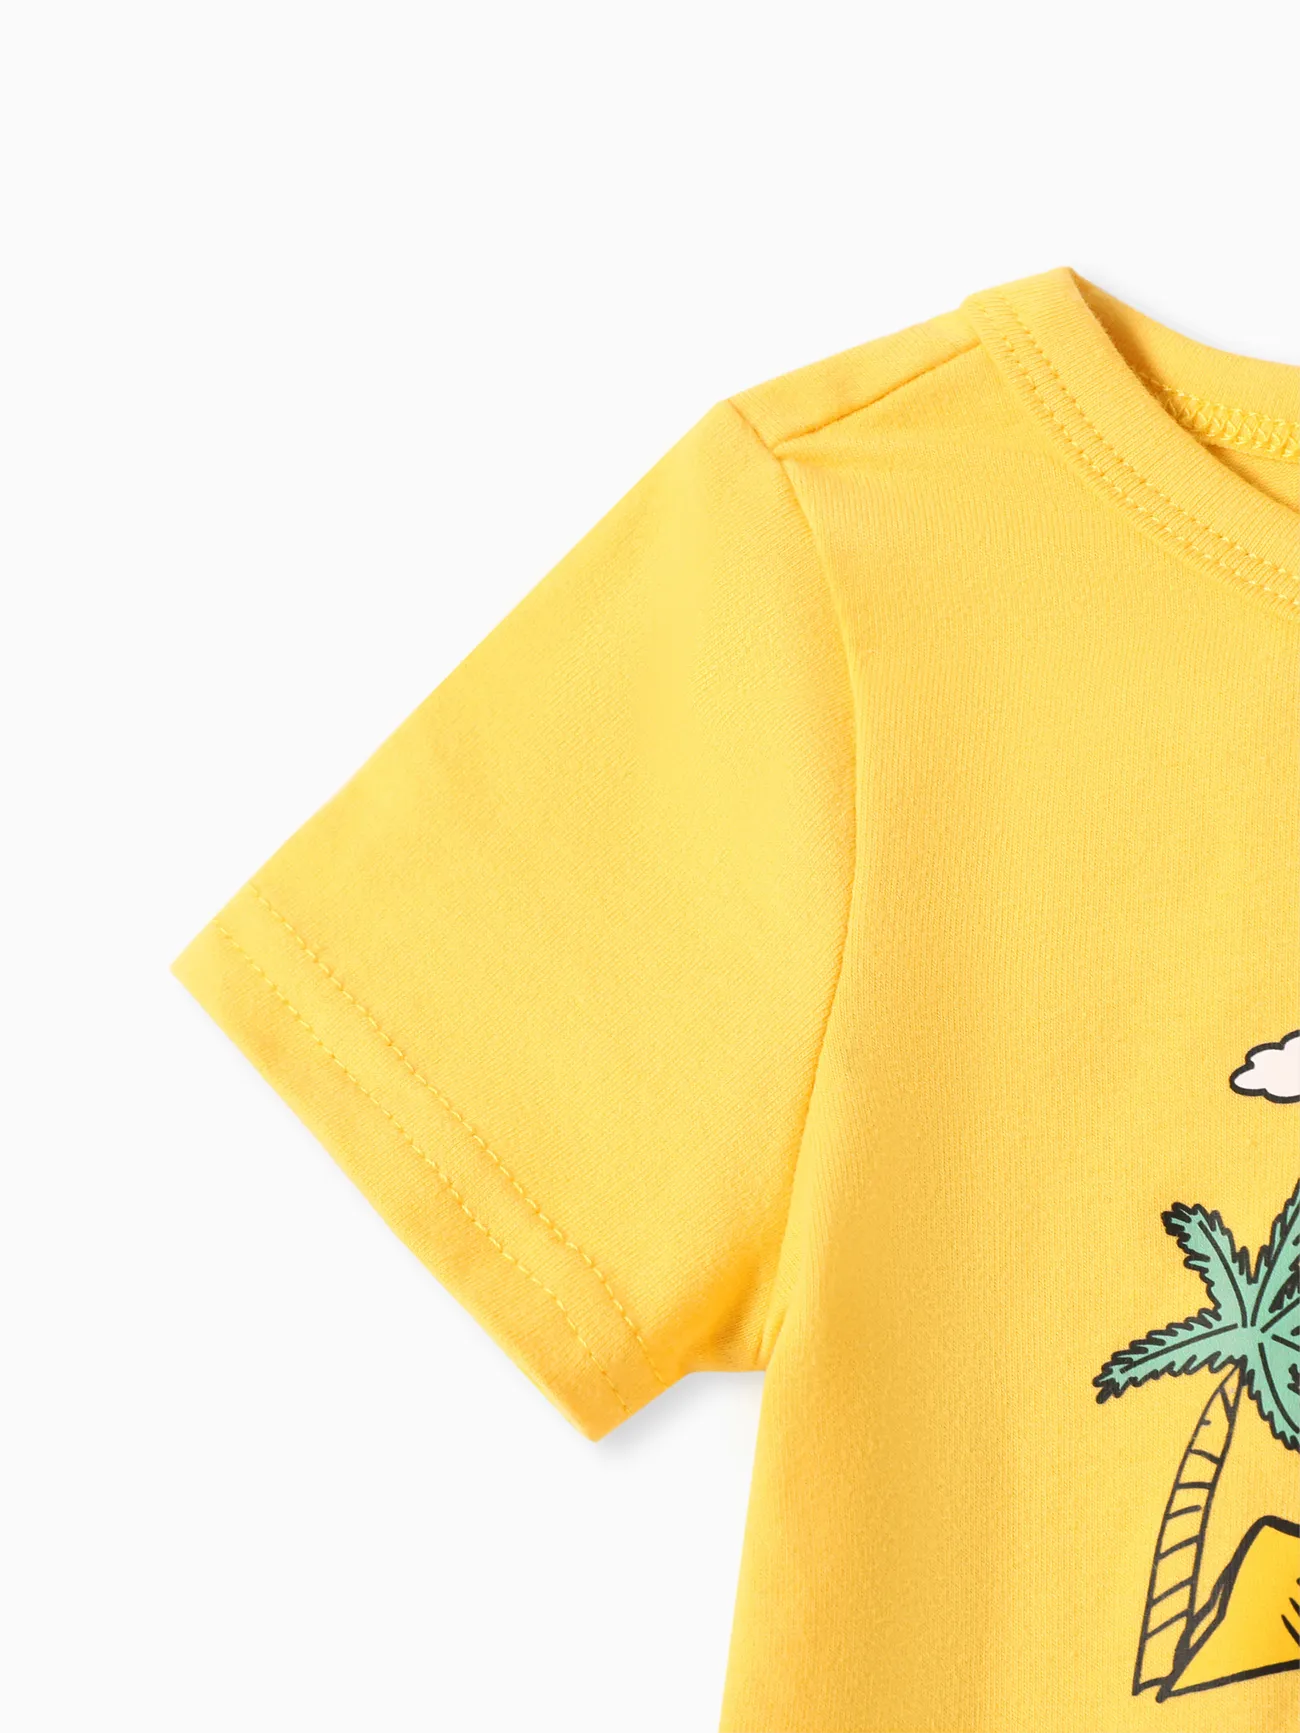 2pcs Baby Boy Dinosuar Print Romper and Shorts Set Yellow big image 1